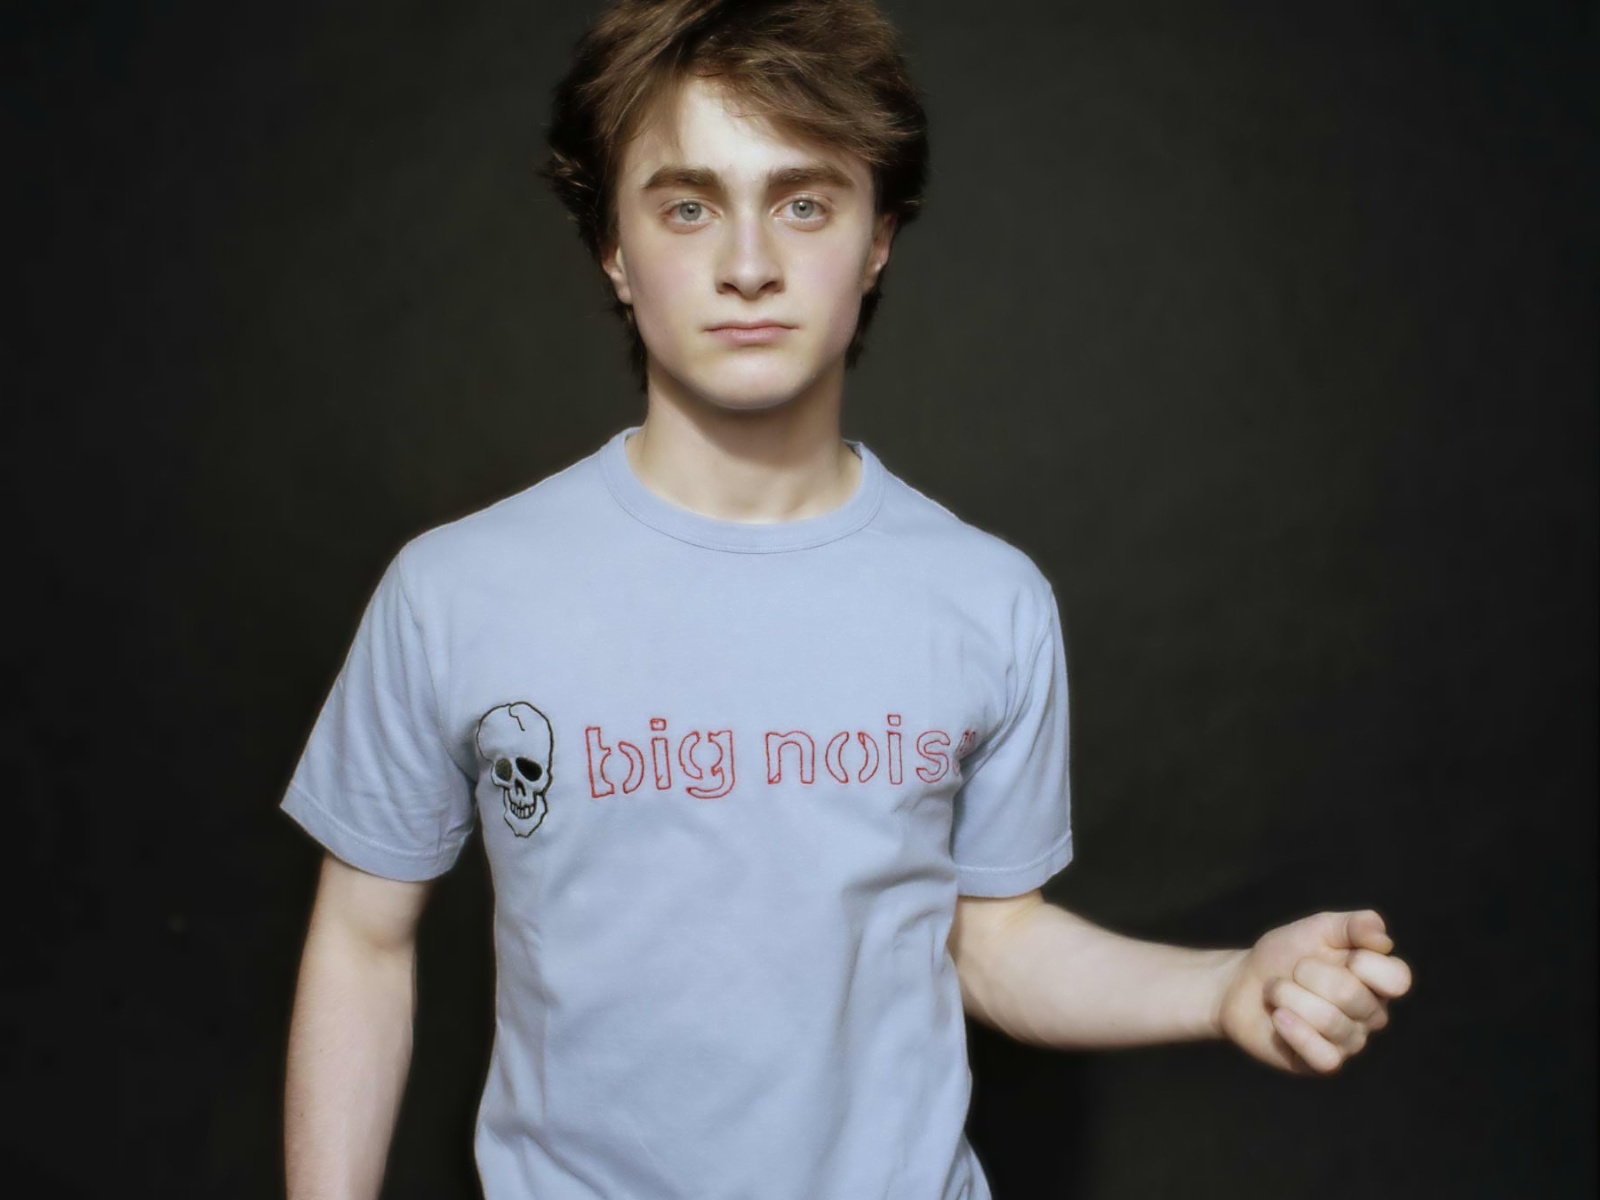 Daniel Radcliffe Actor HD Wallpaper World